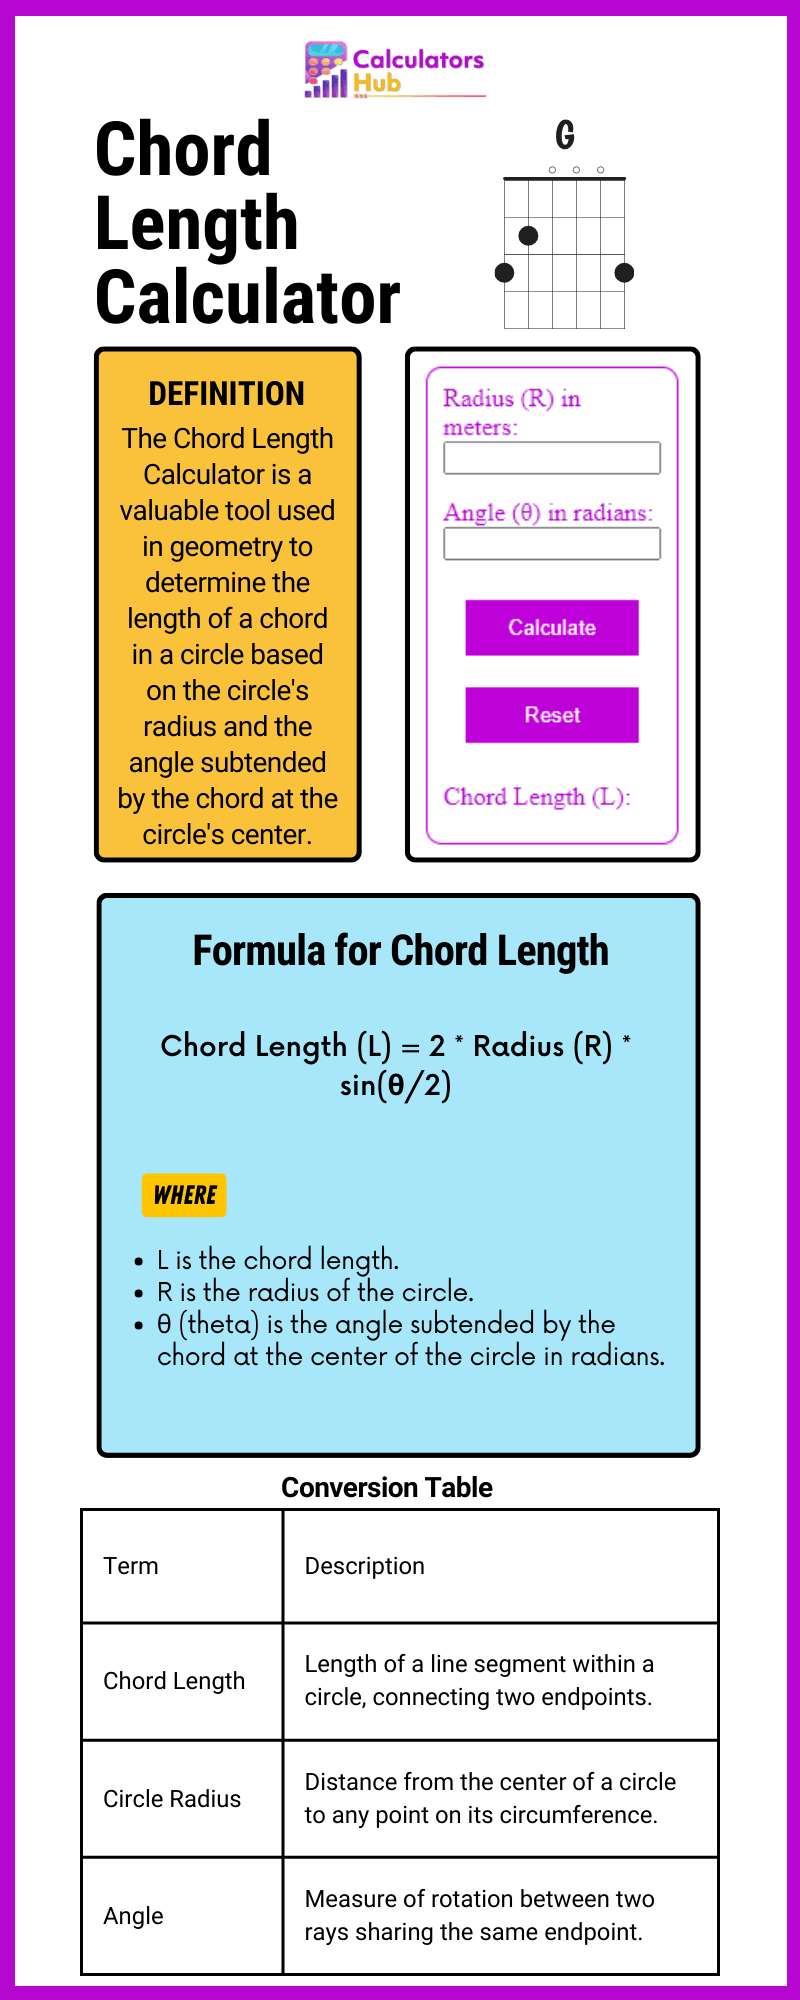 Chord Length Calculator